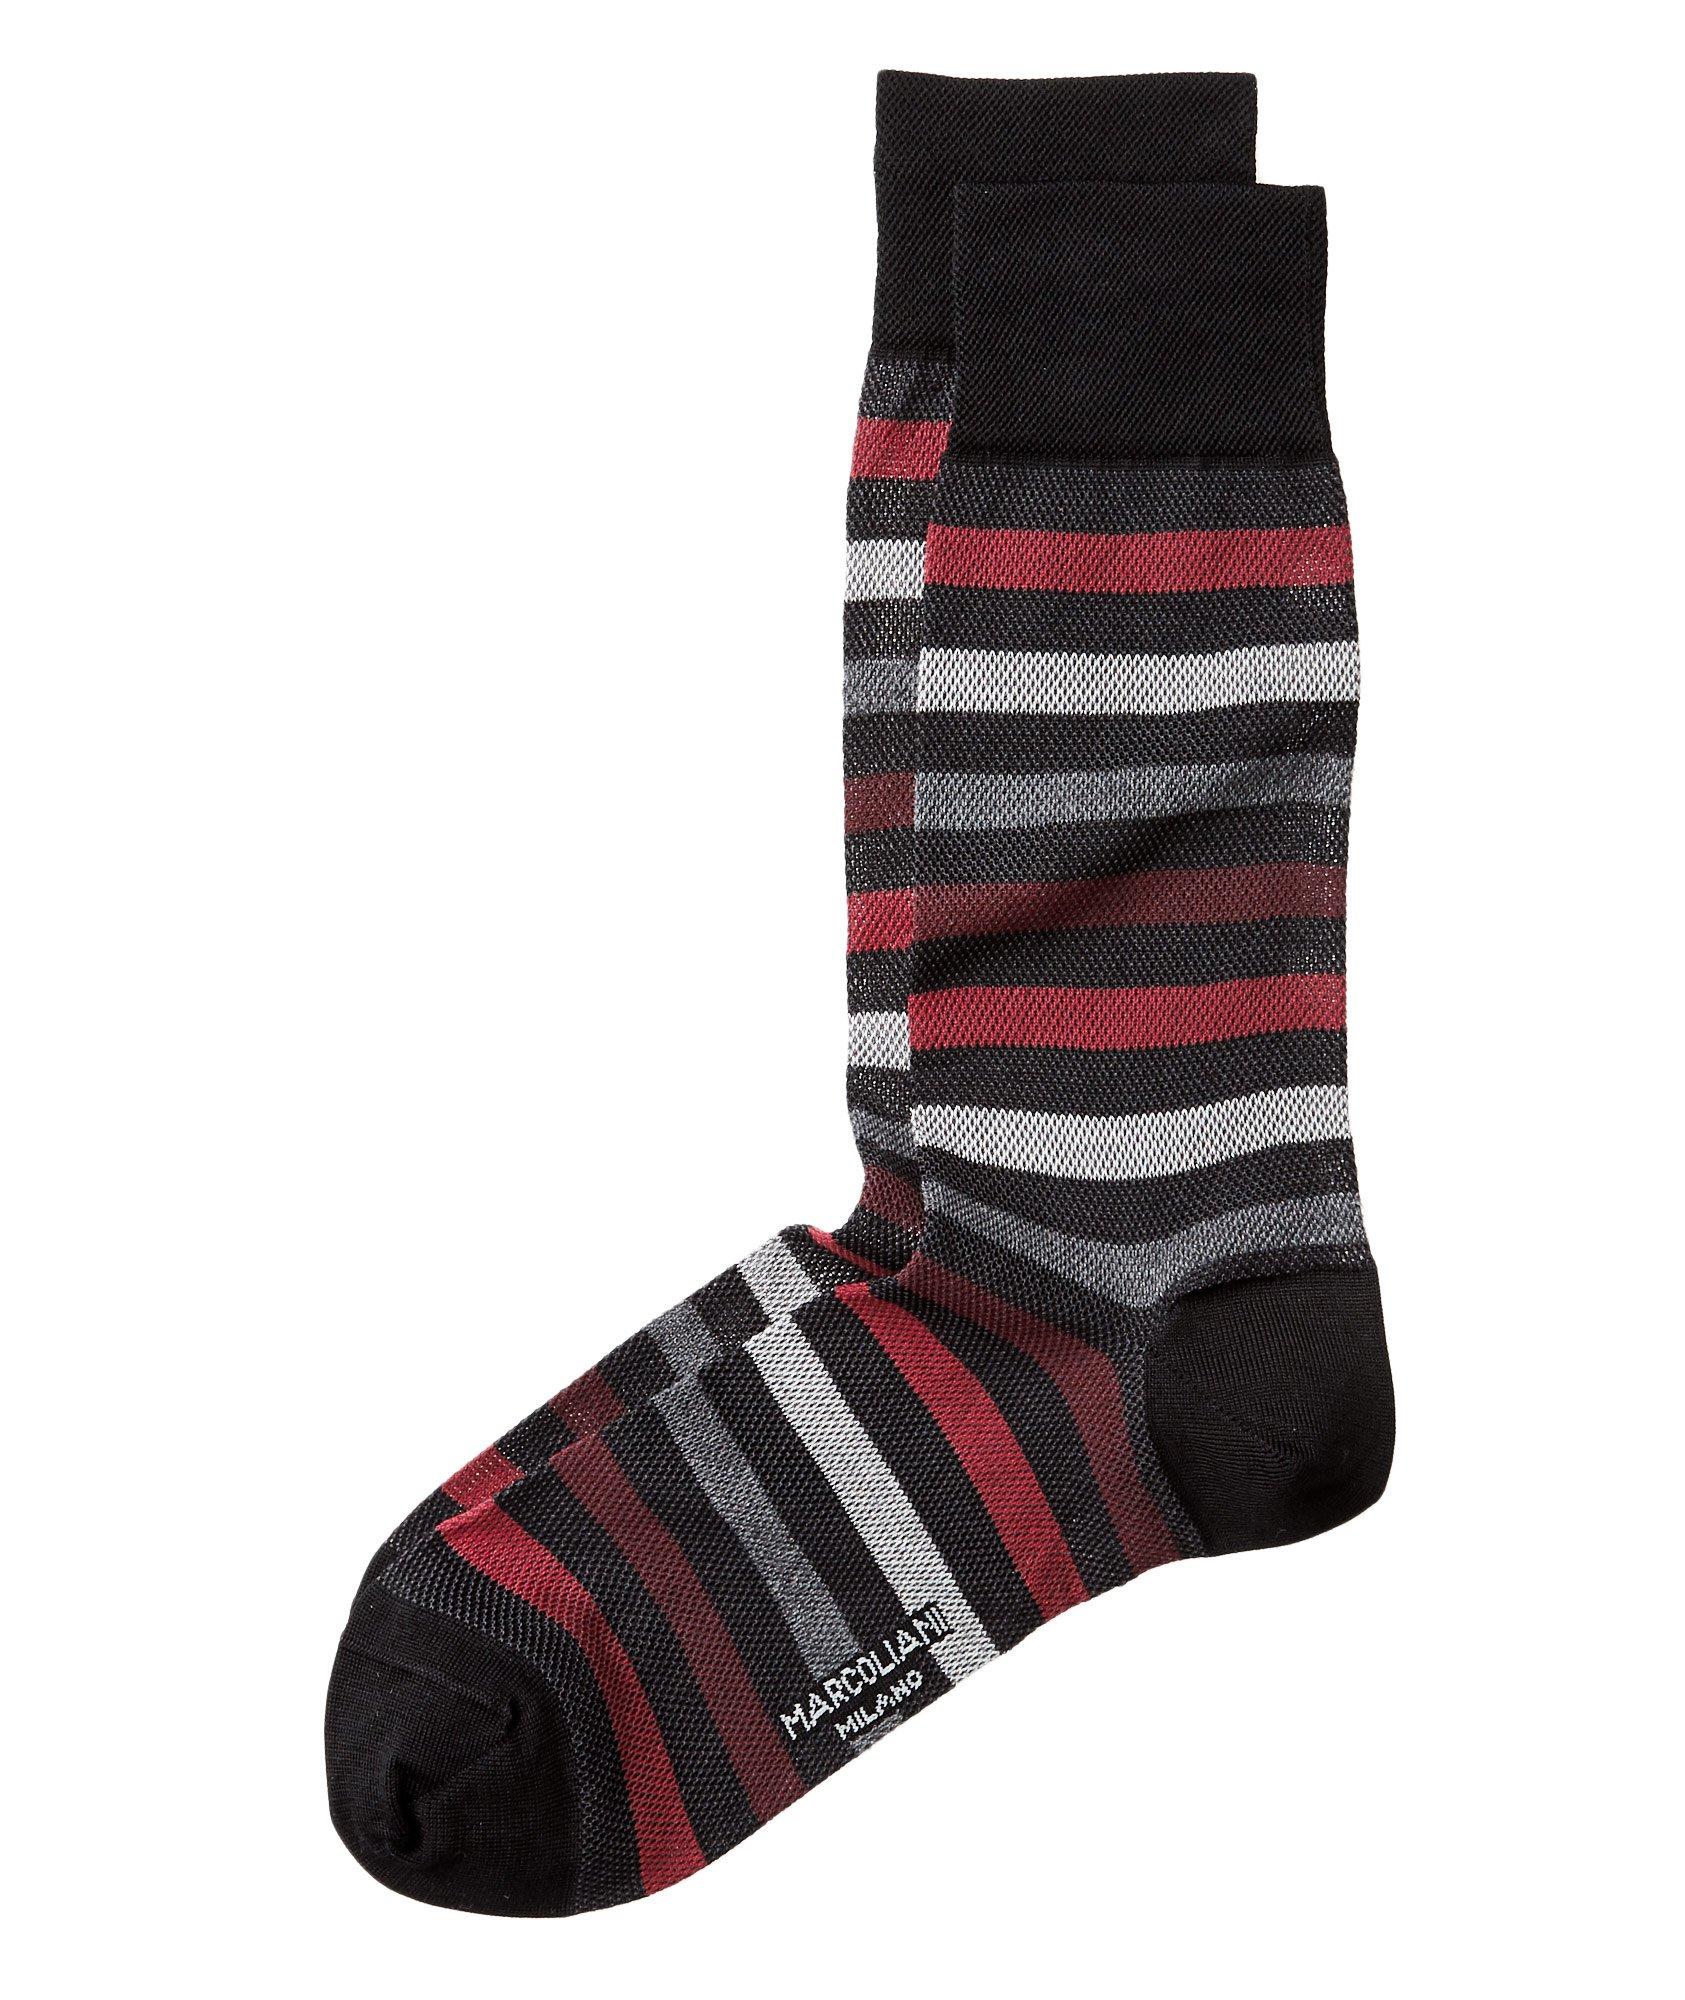 Striped Cotton Socks image 0